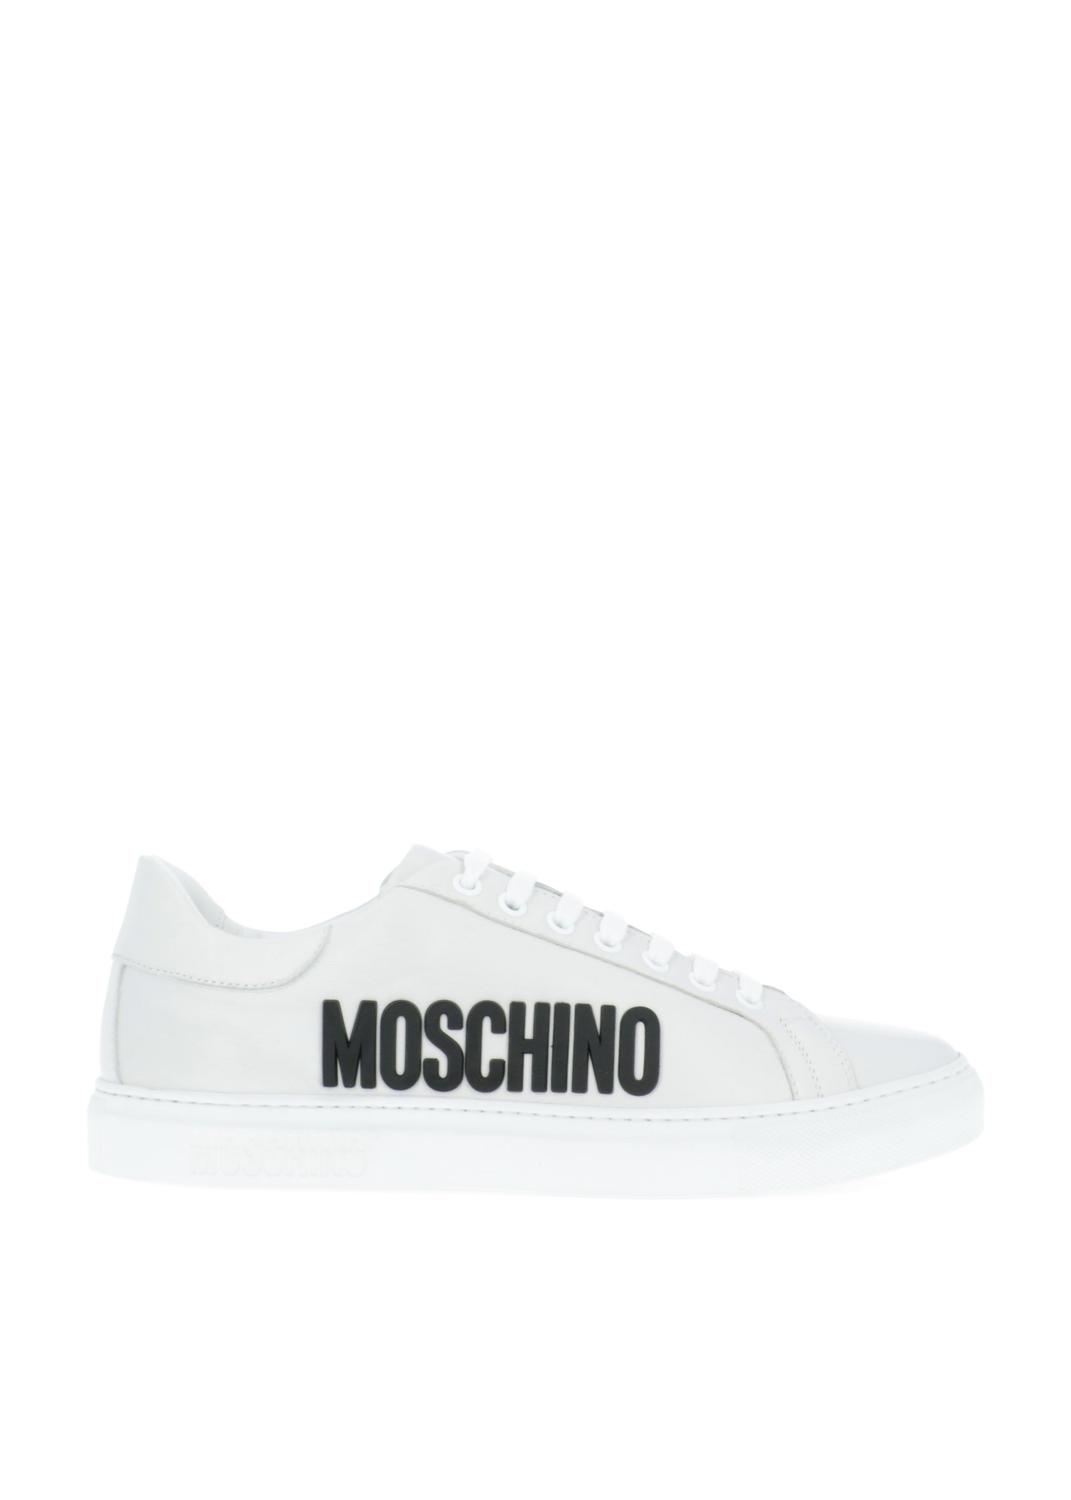 Moschino tenis sneakers bajos con logo MSC-MB15862